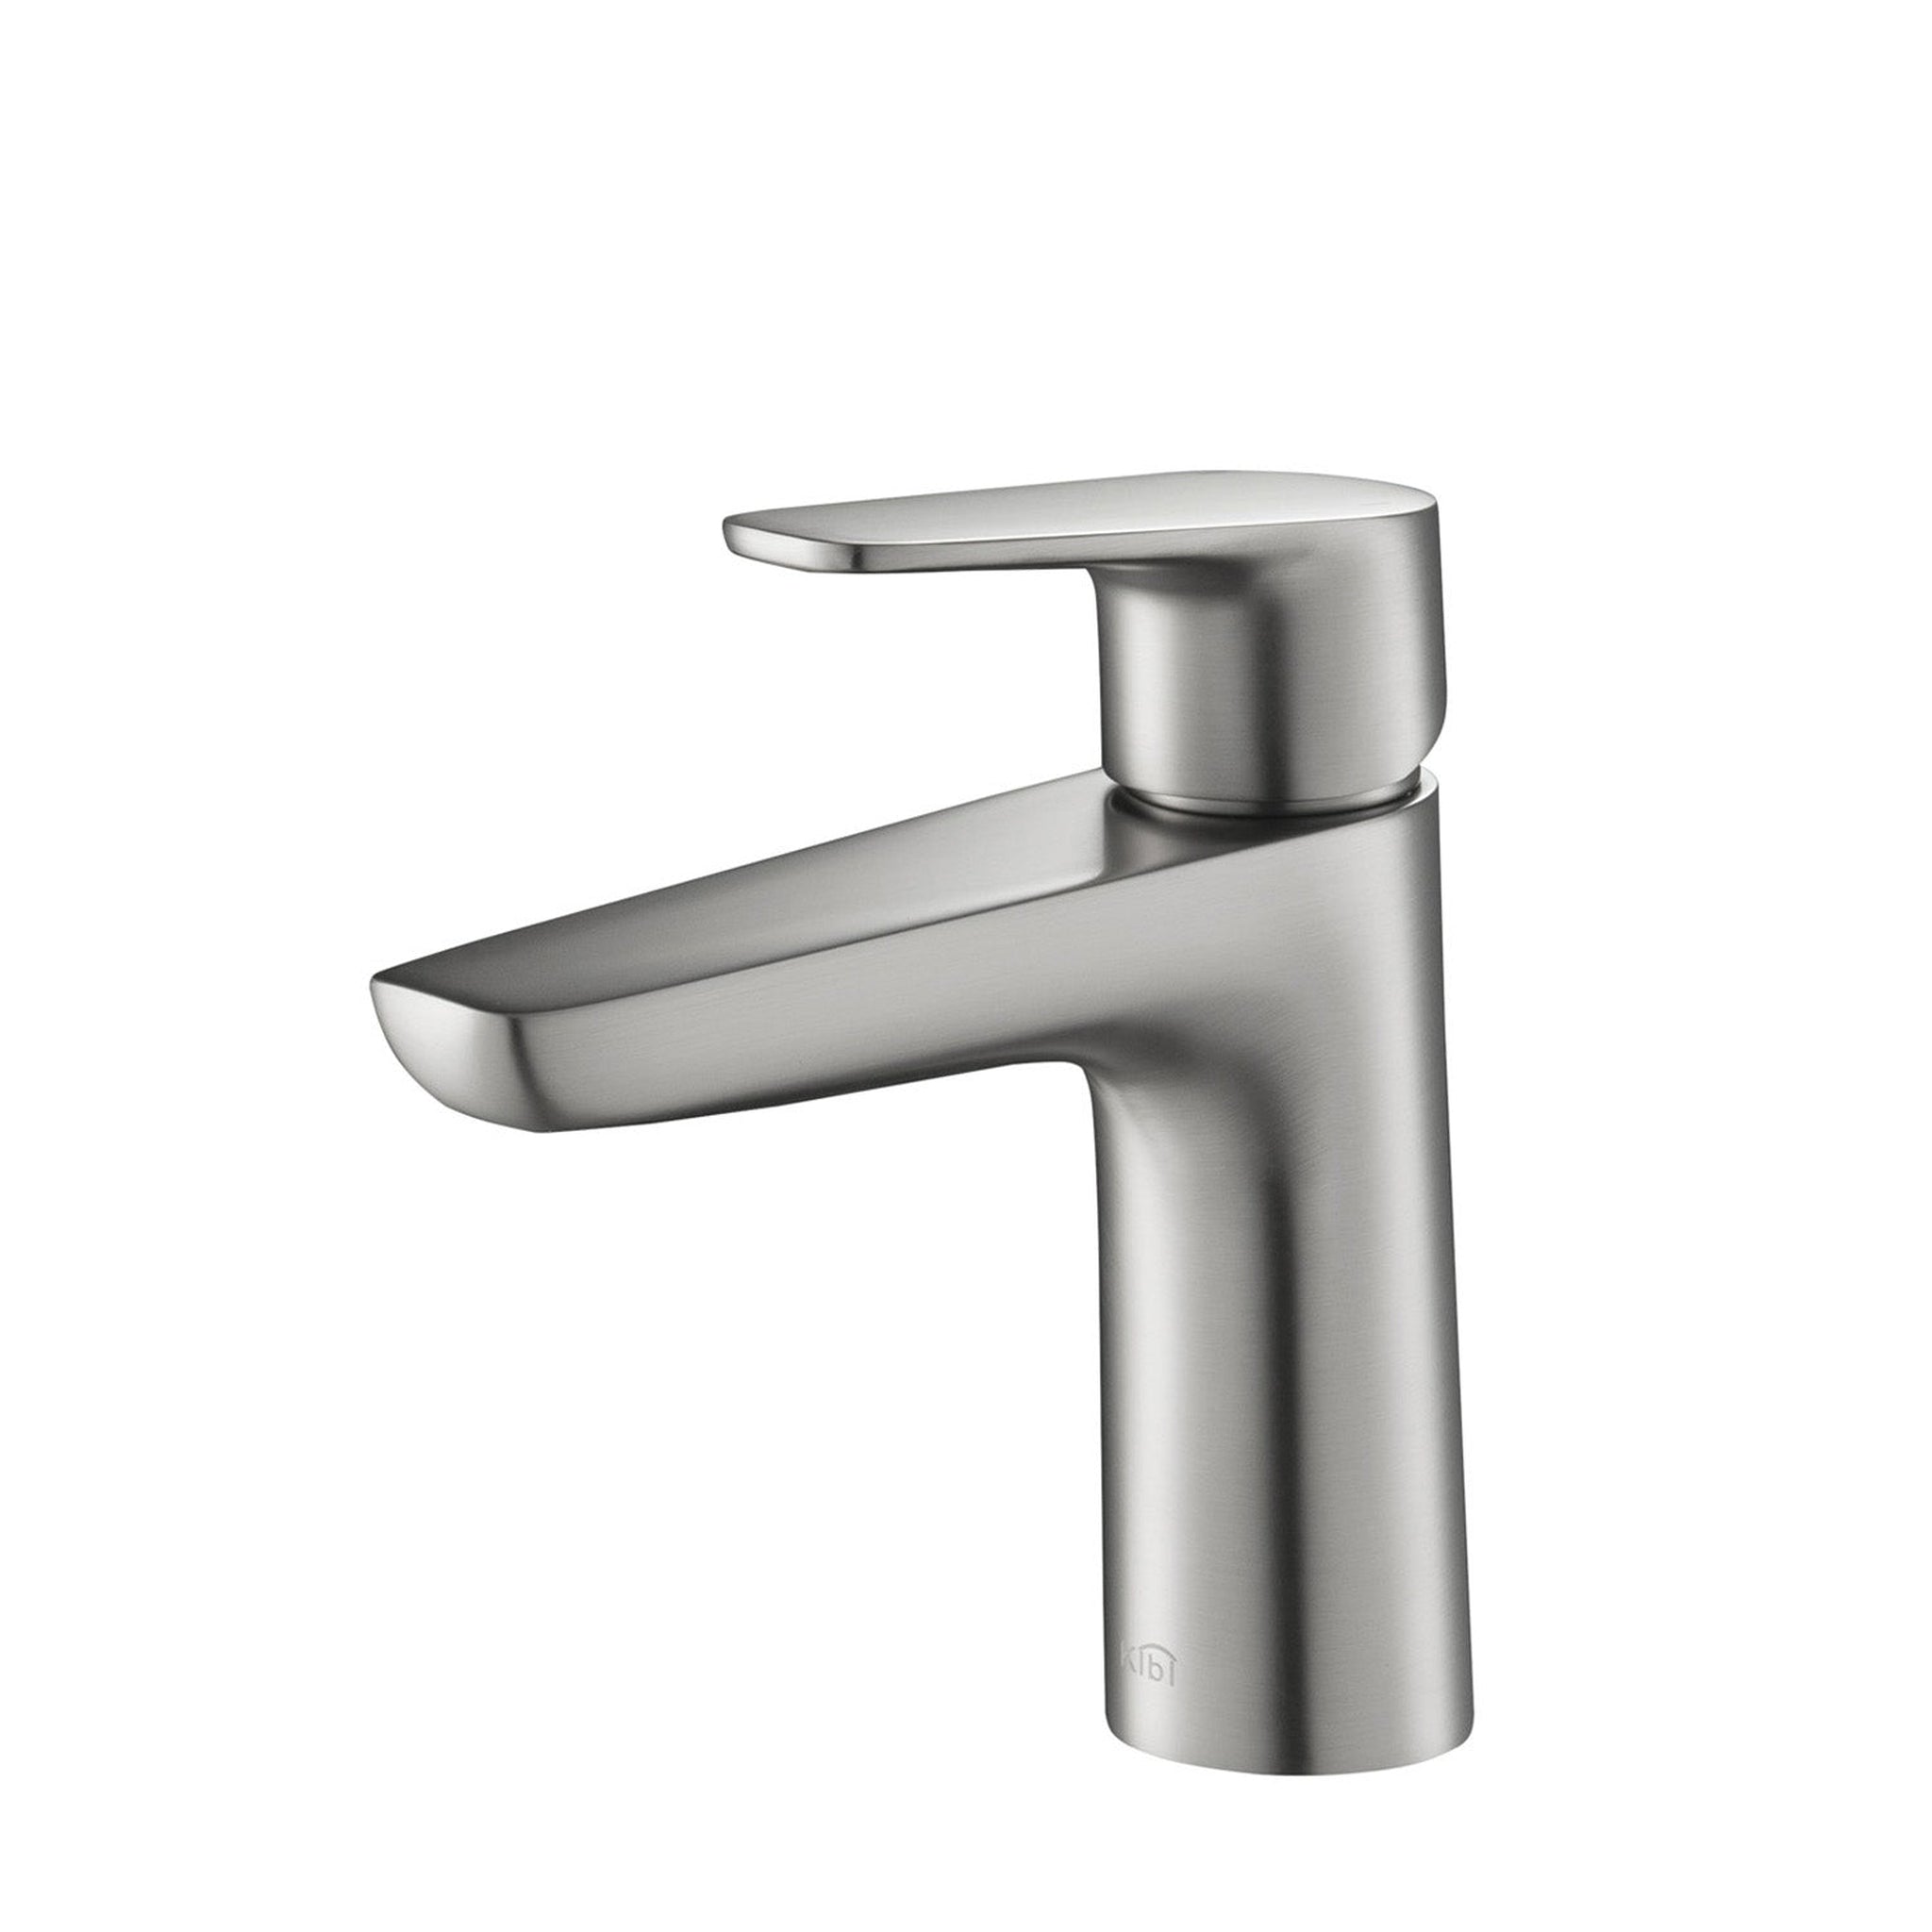 KIBI, KIBI Harmony Single Handle Brushed Nickel Solid Brass Bathroom Sink Faucet